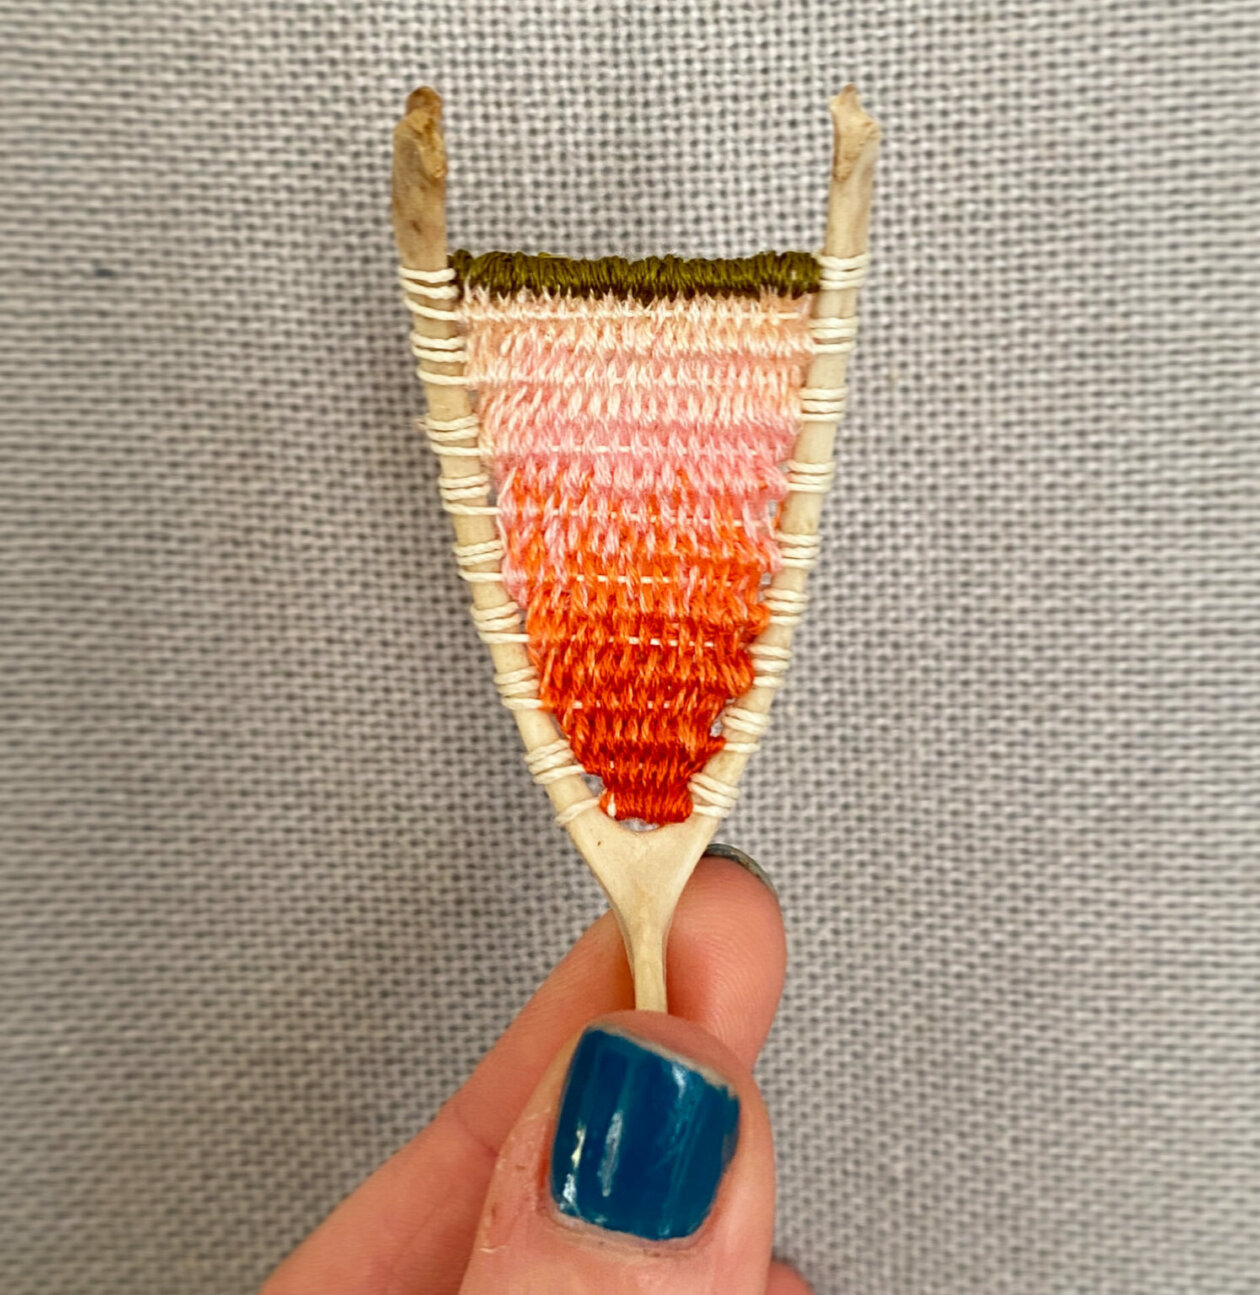 Miniature Looms By Kaci Smith 10